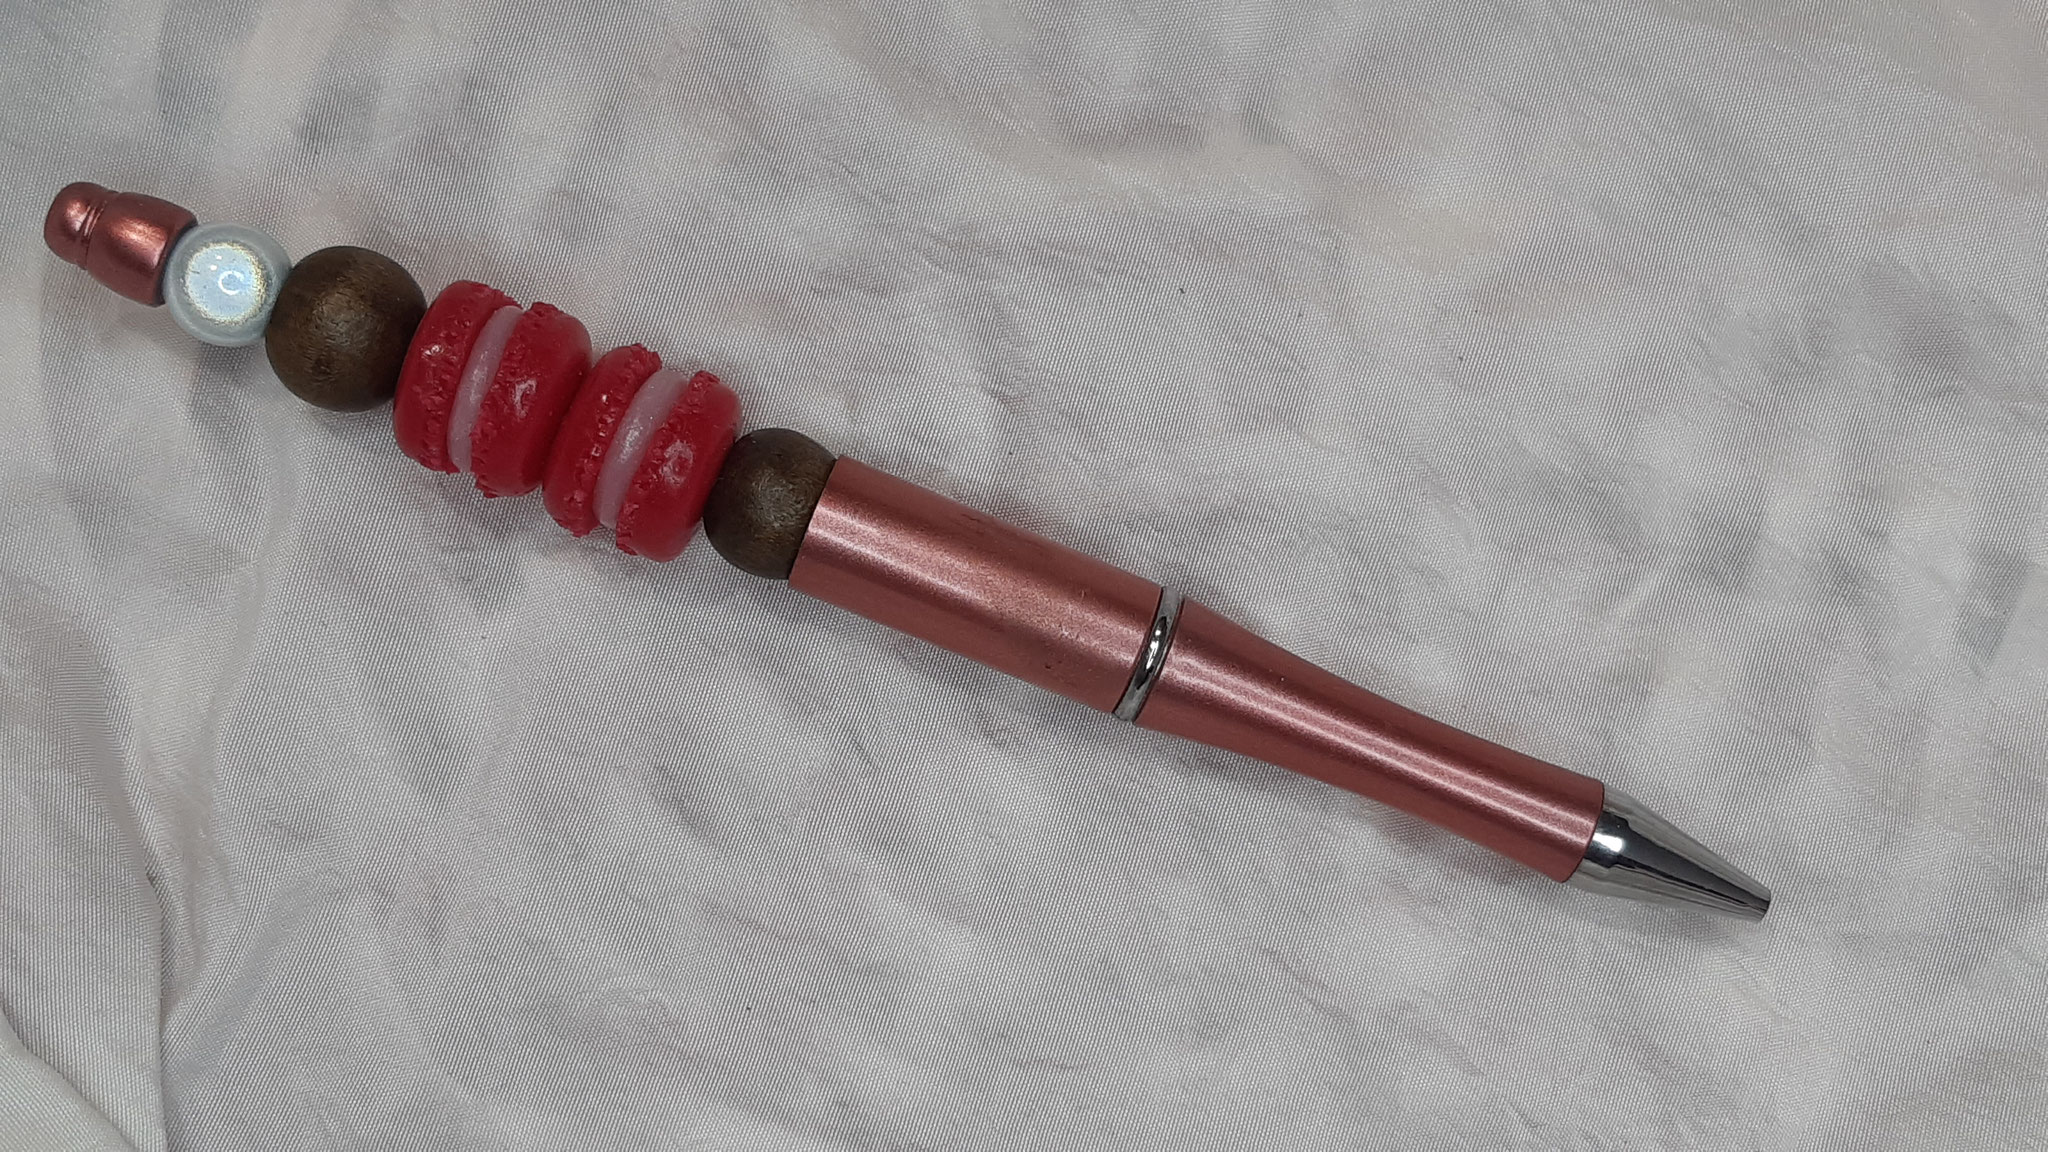 modèle 1 : stylo vieux rose macarons roses